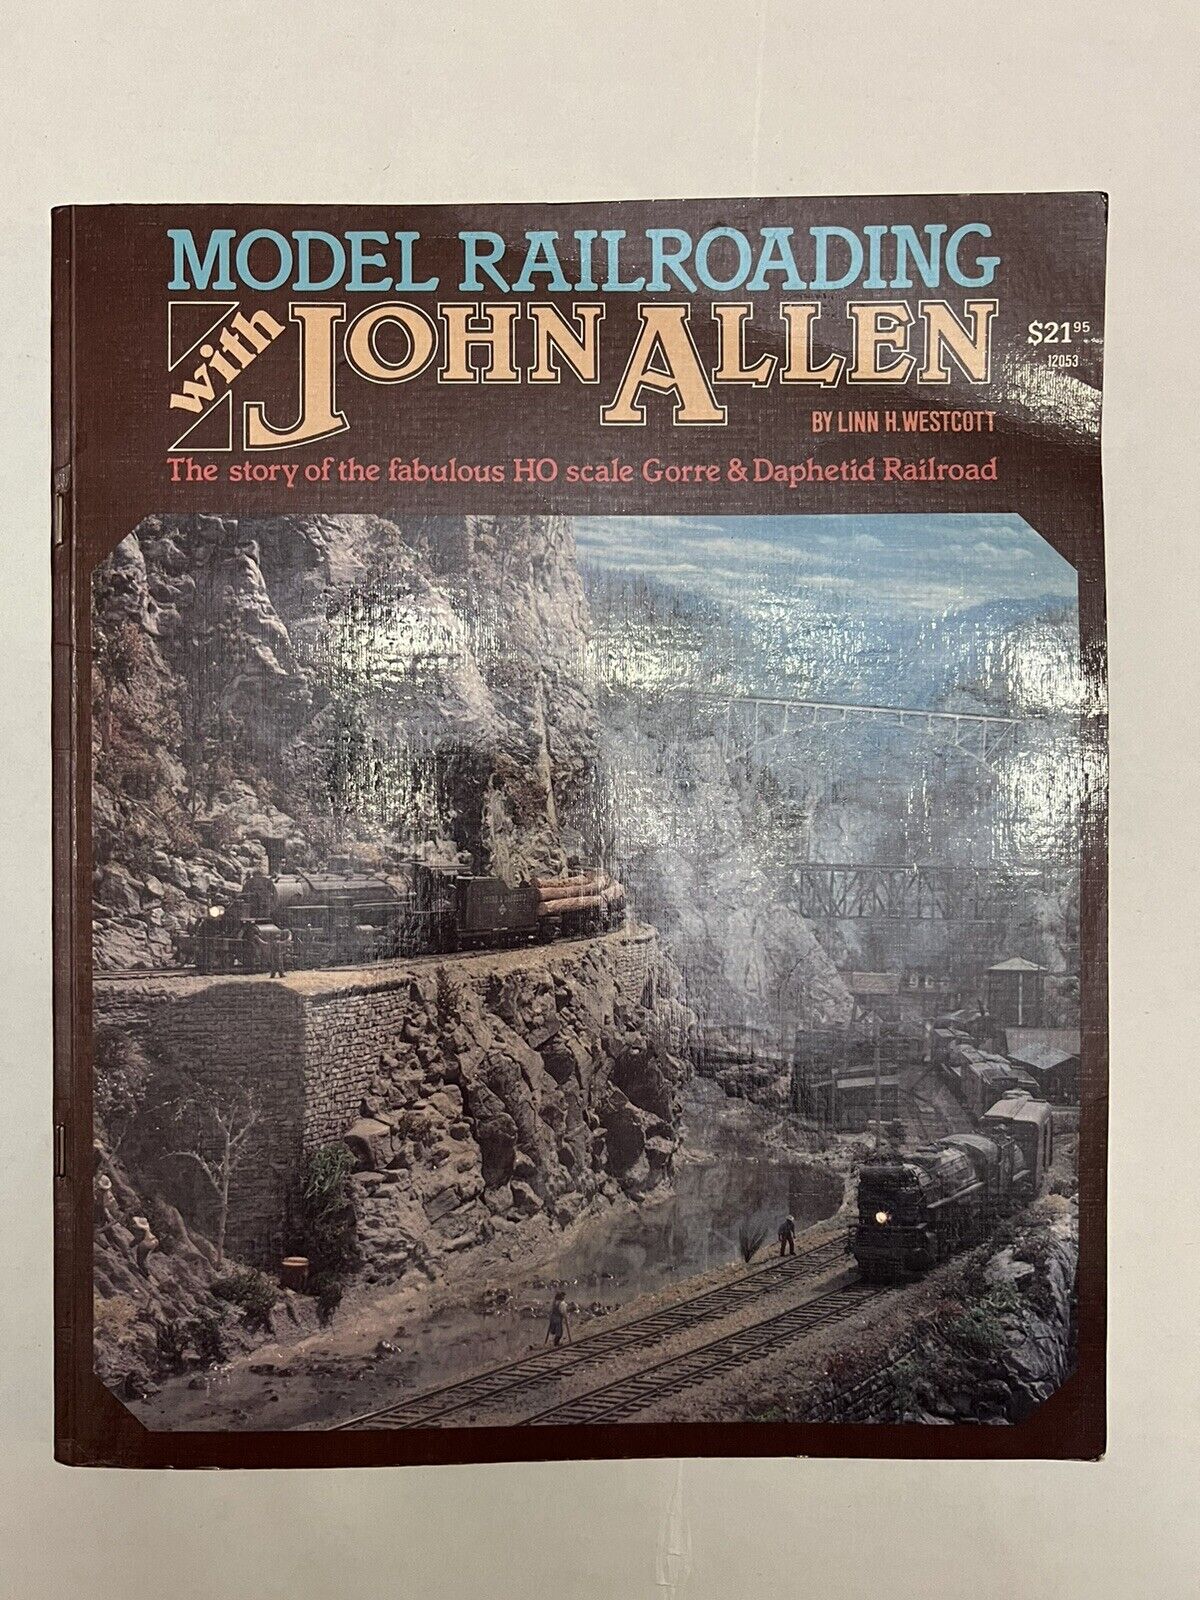 Model Railroading with John Allen Linn H. Westcott HO Scale Gorre Daphetid 1981